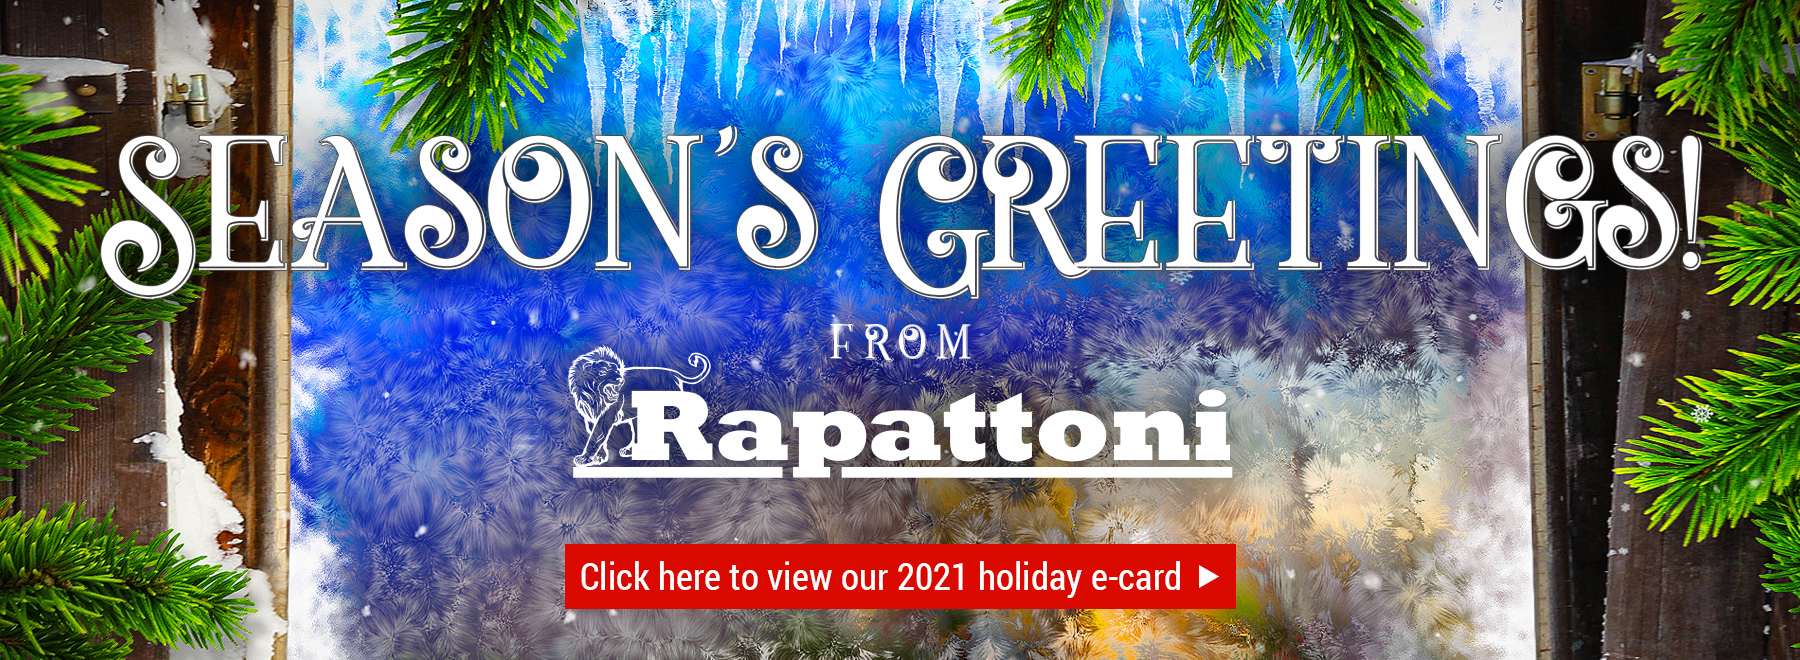 Season's Greetings from Rapattoni Corporation 2021